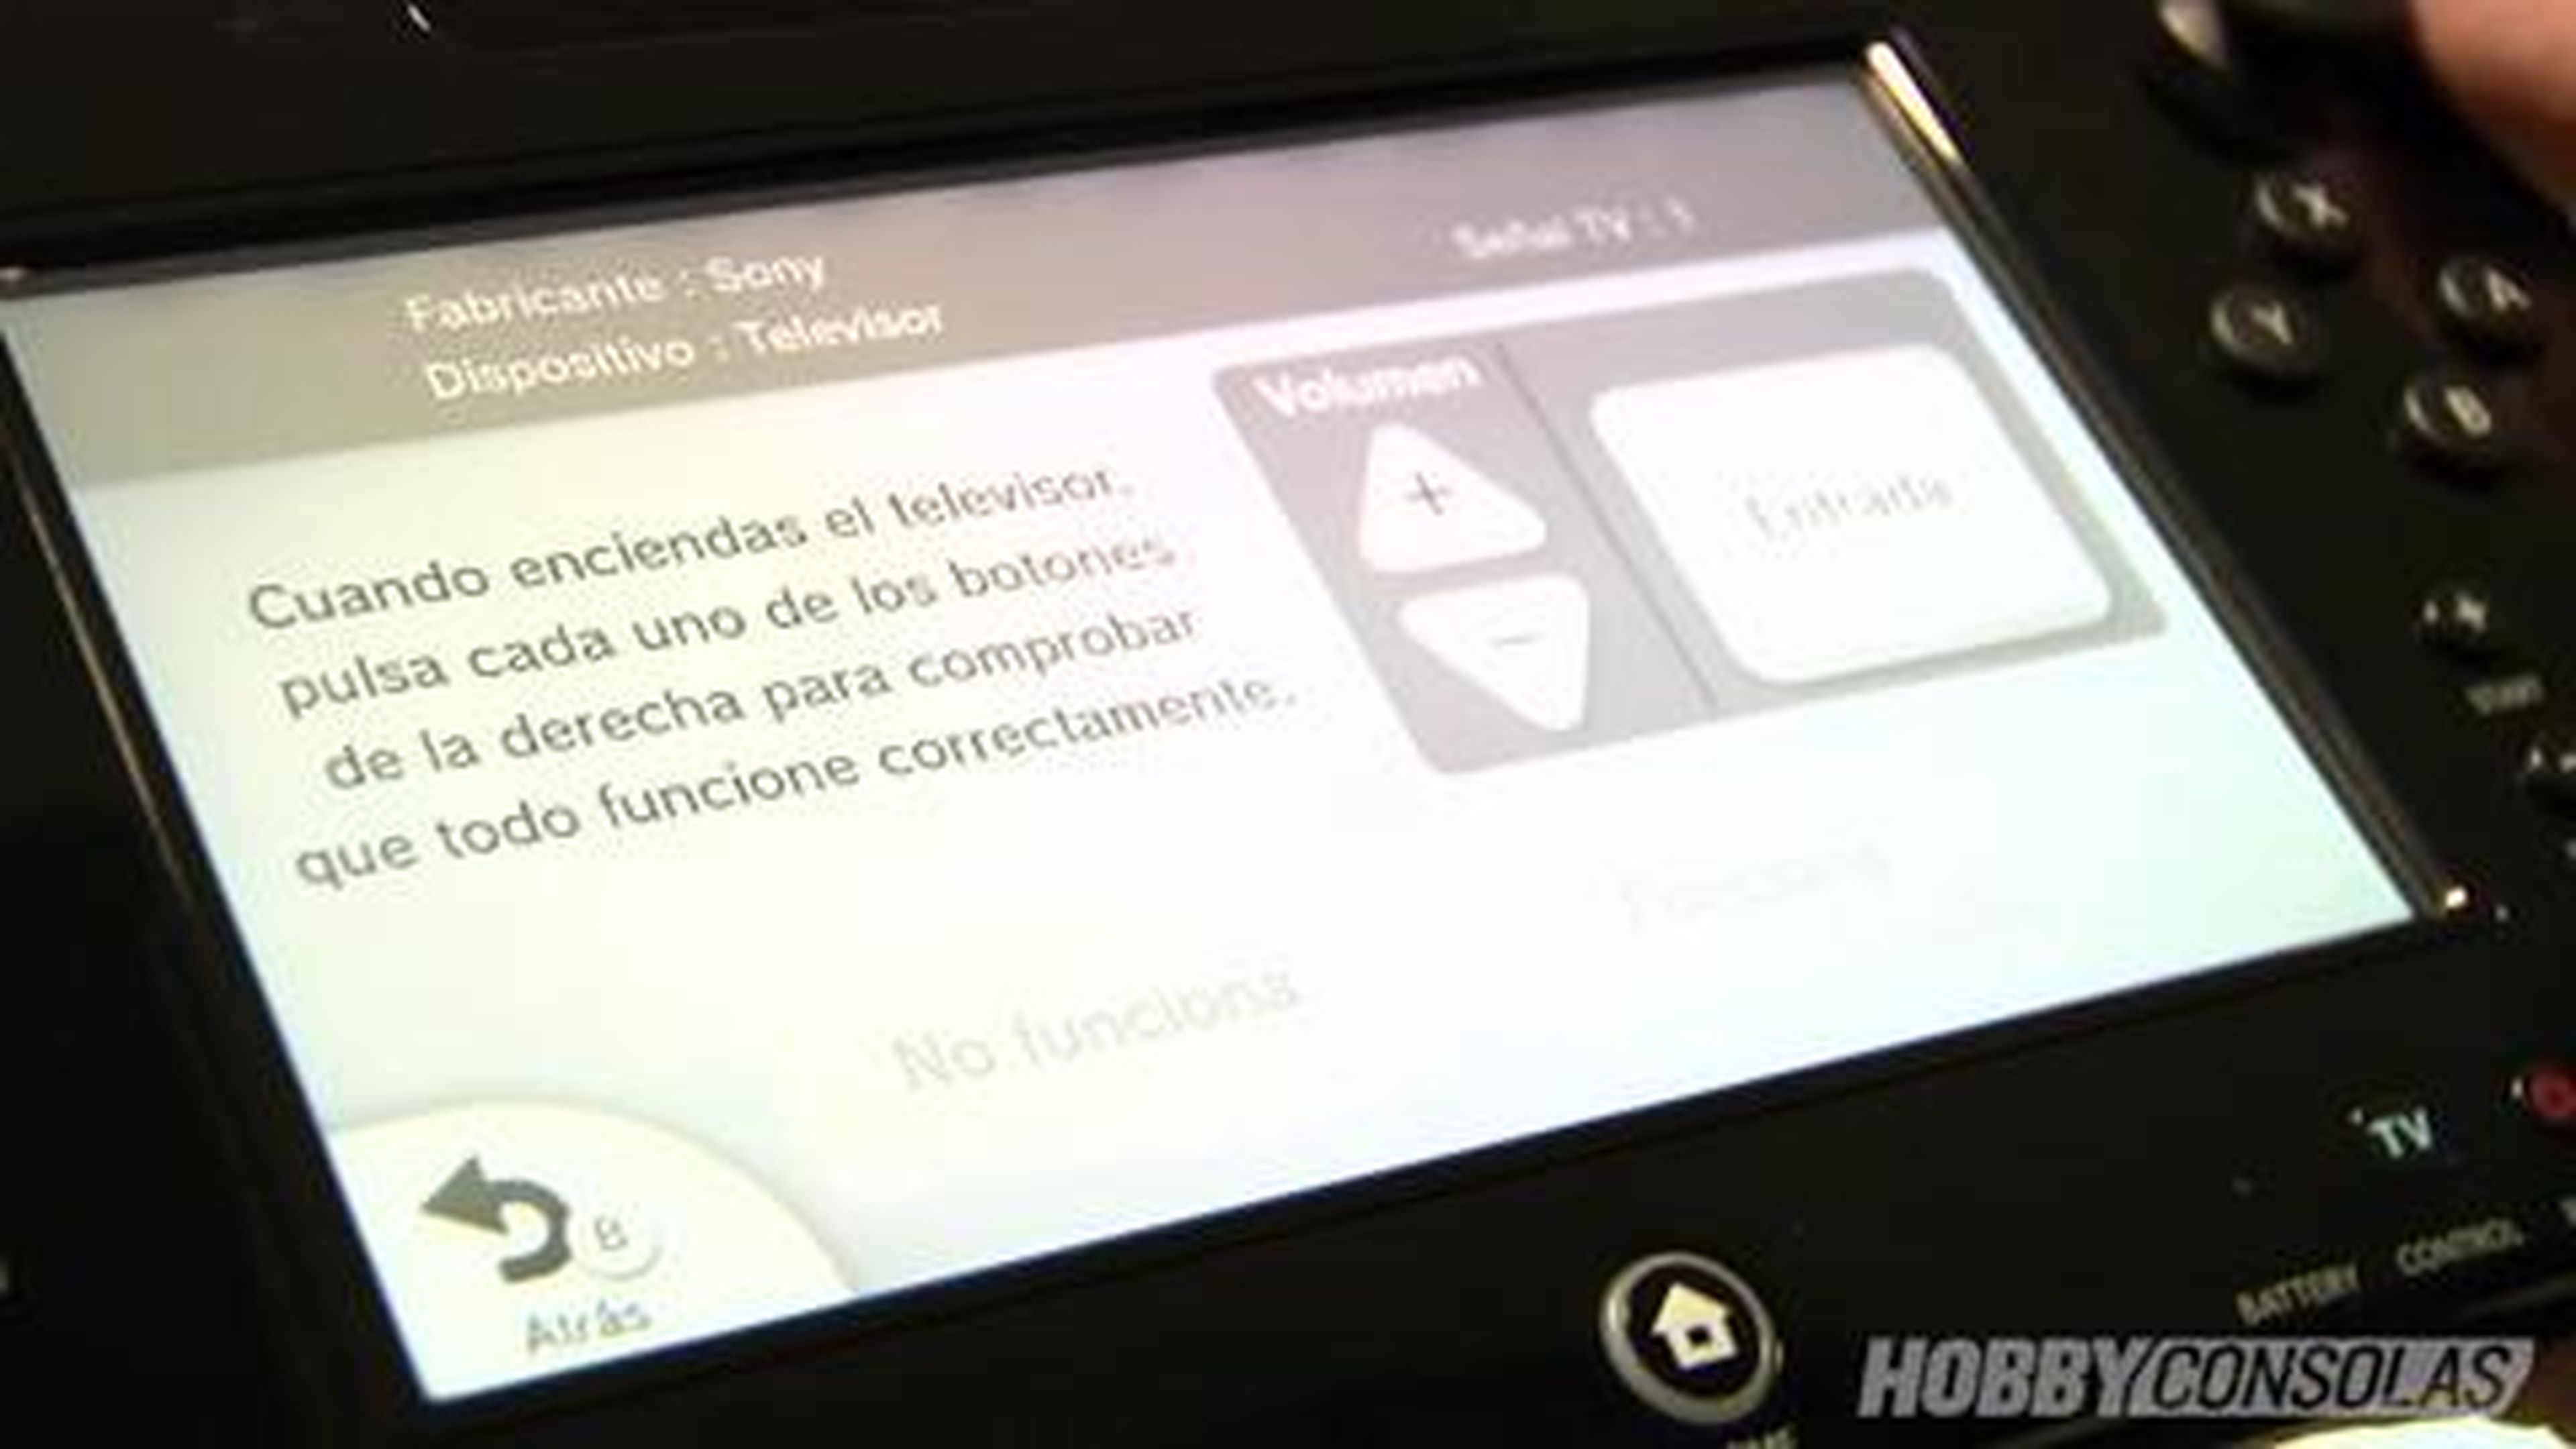 Así es el Gamepad de Wii U (HD) en HobbyConsolas.com